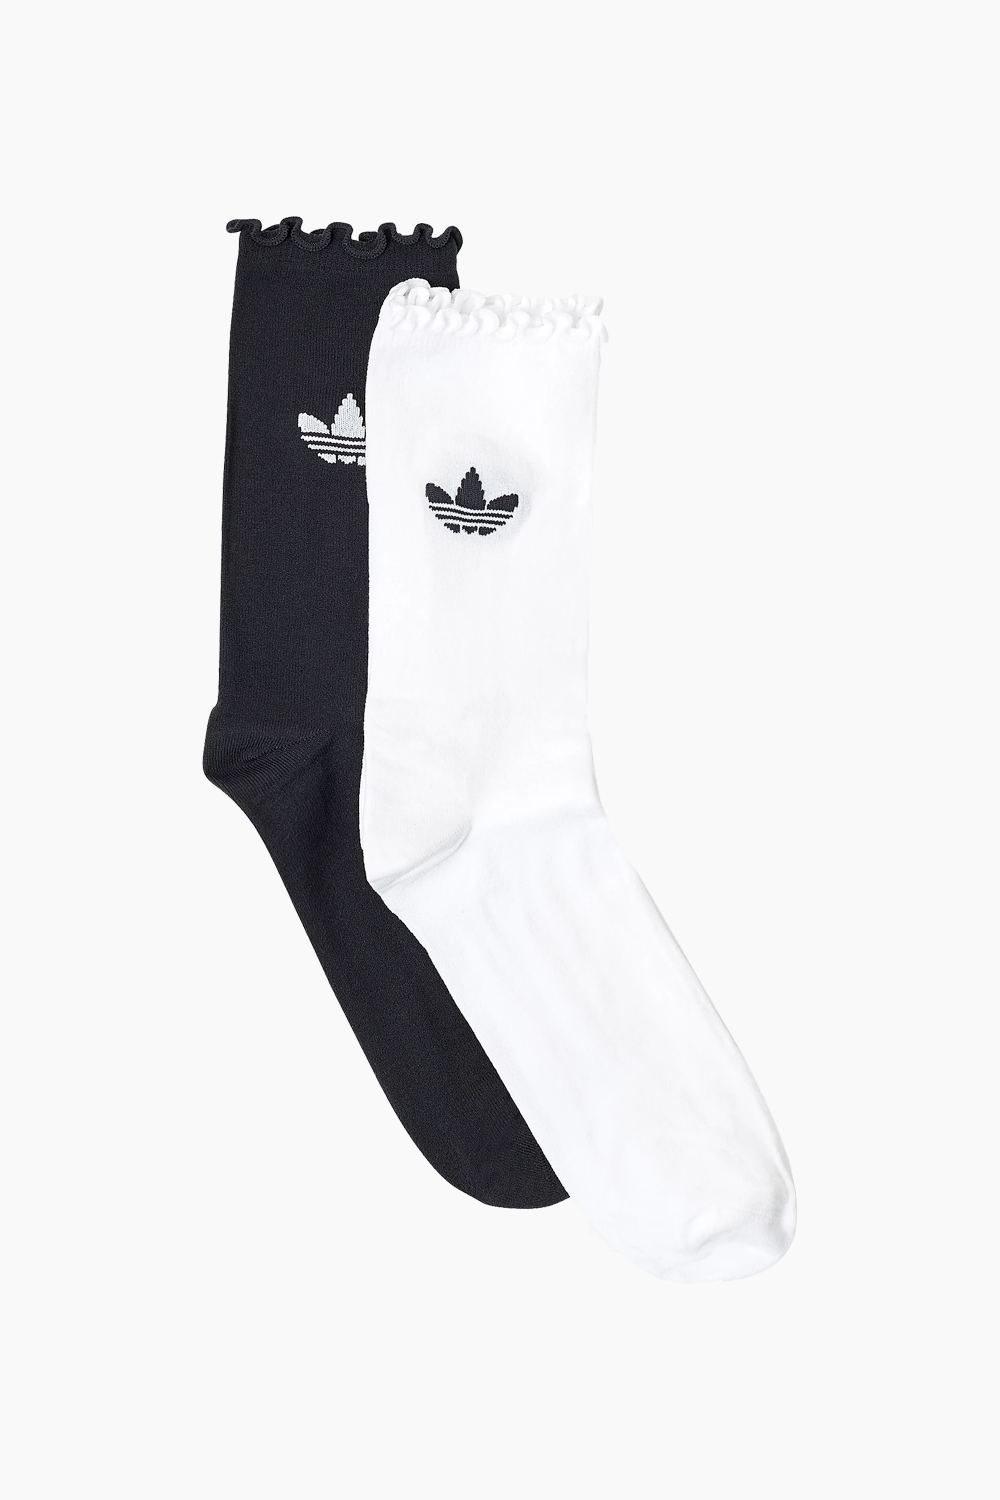 Ruffle Crw 2PP Socks - White/Black - Adidas Originals - Hvid S